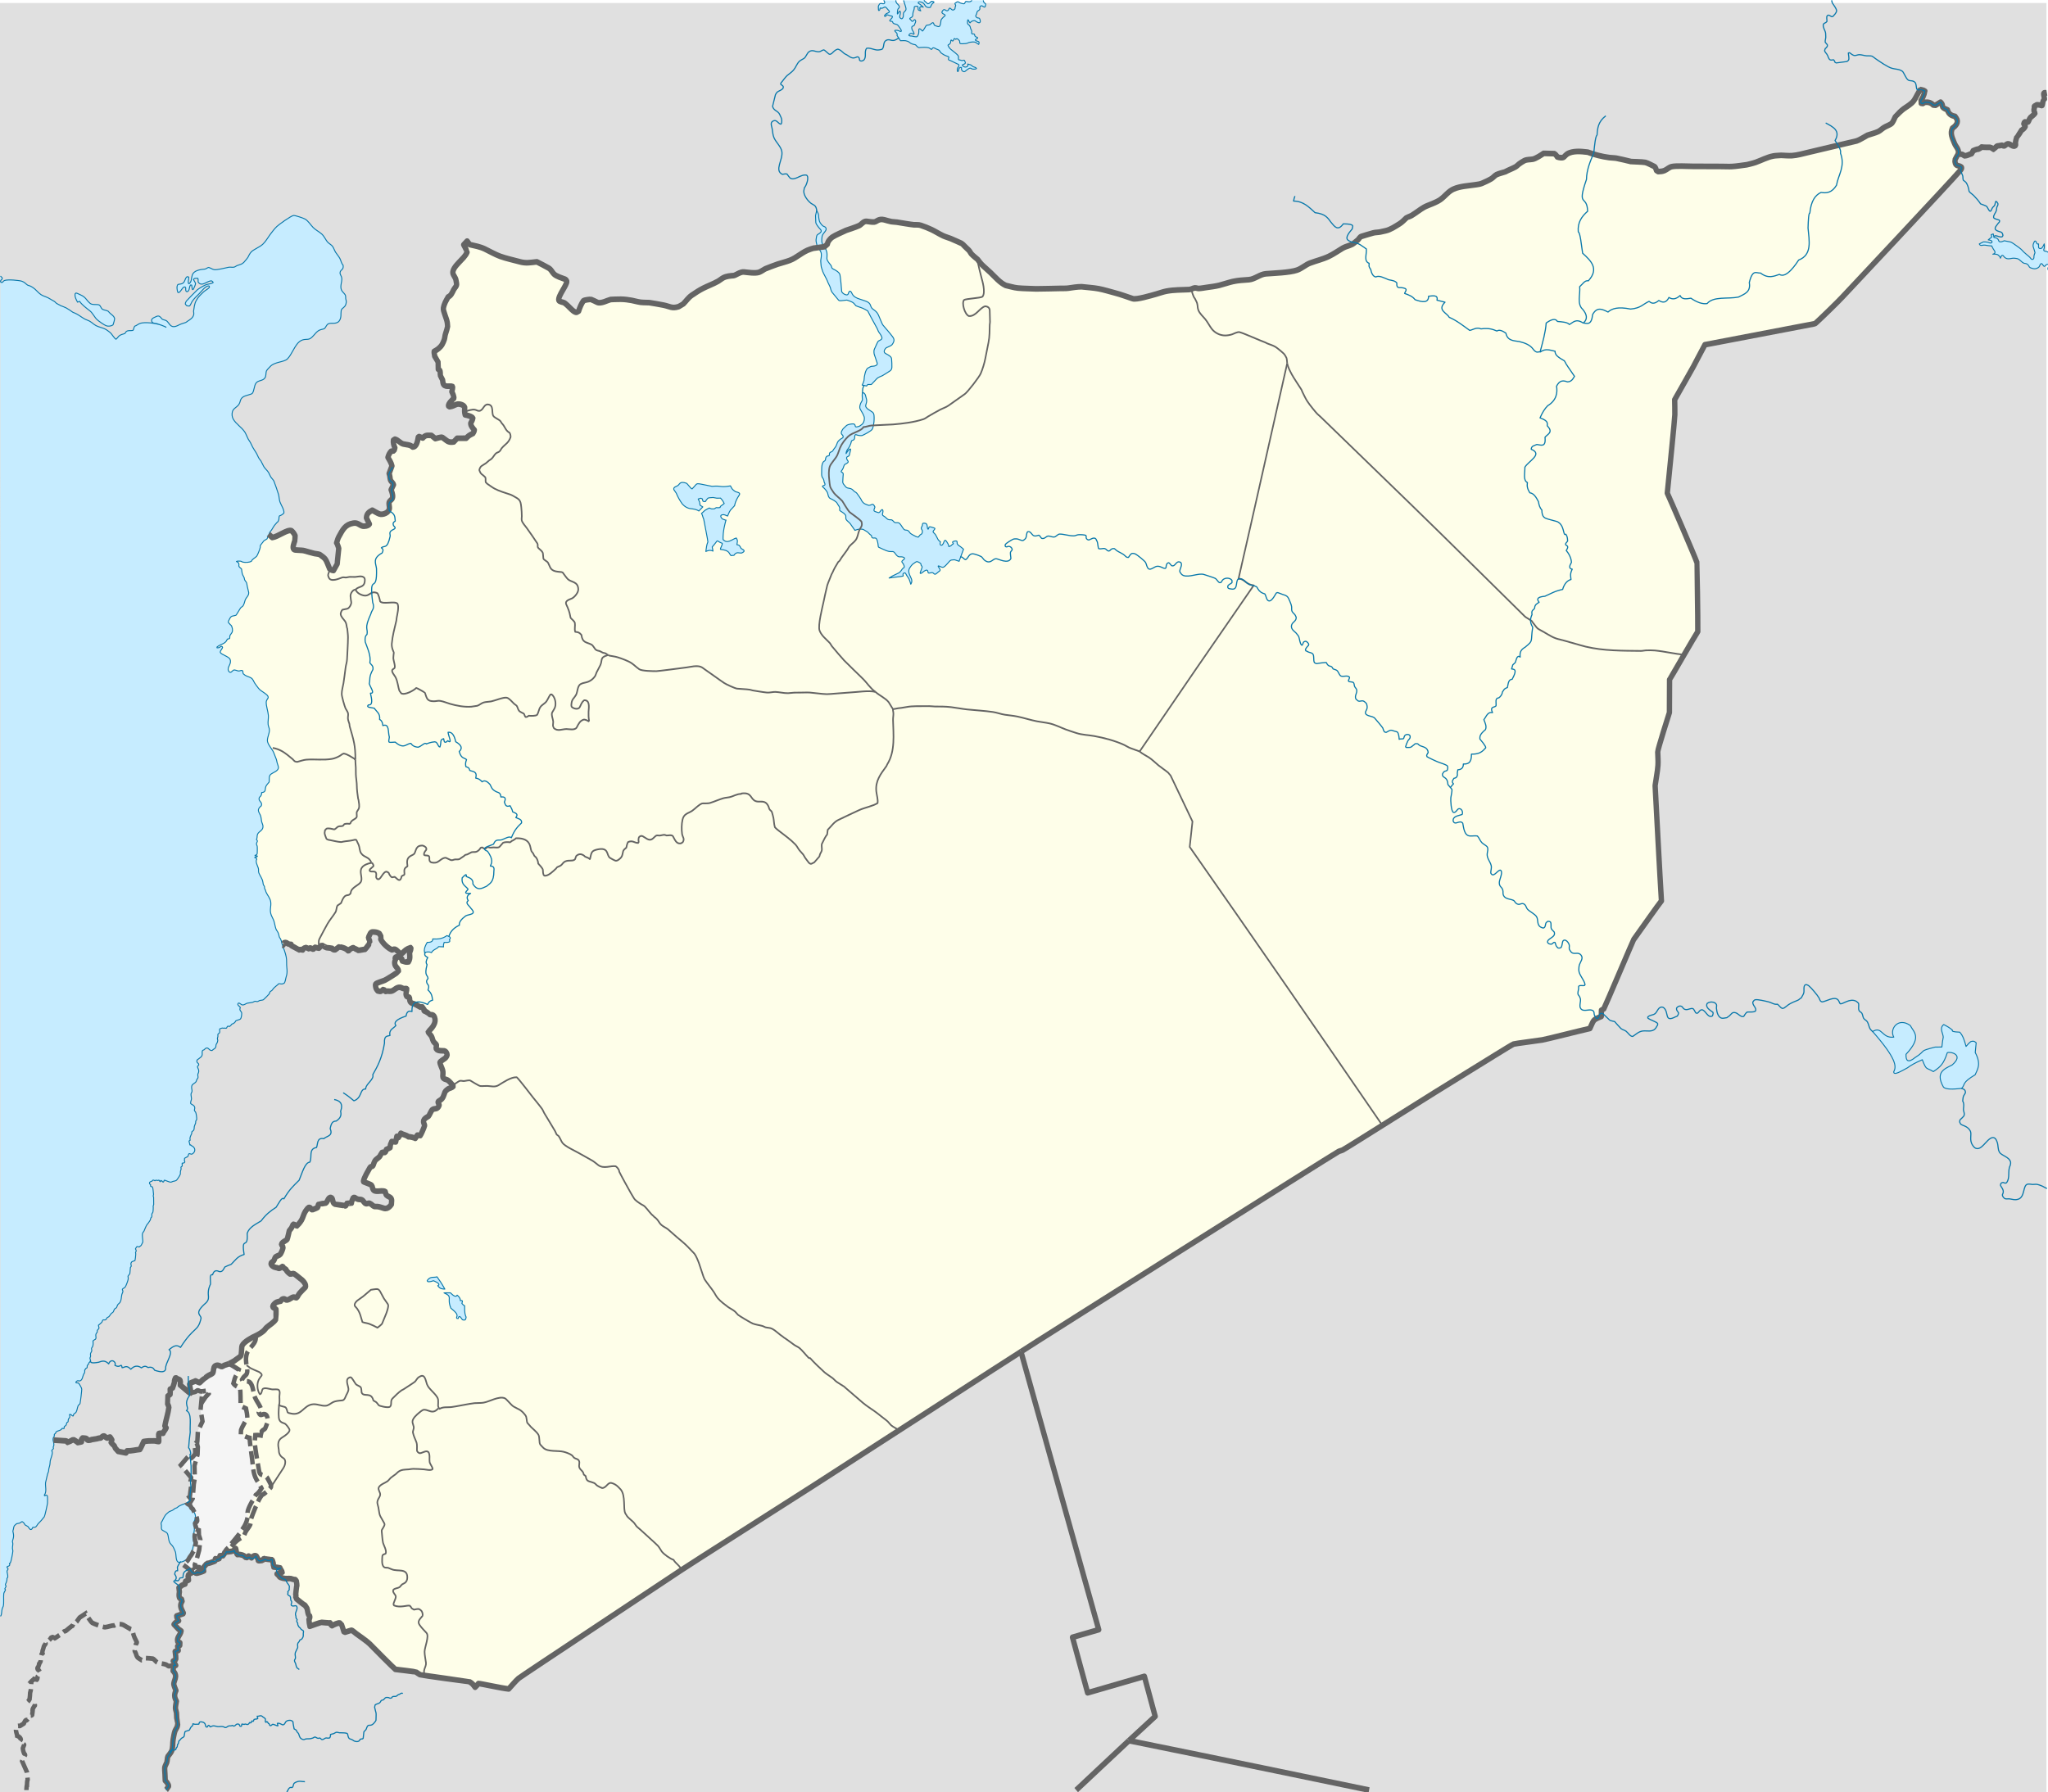 Lothar von Richthofen/Template:Syrian civil war detailed map (Coast) is located in Syria